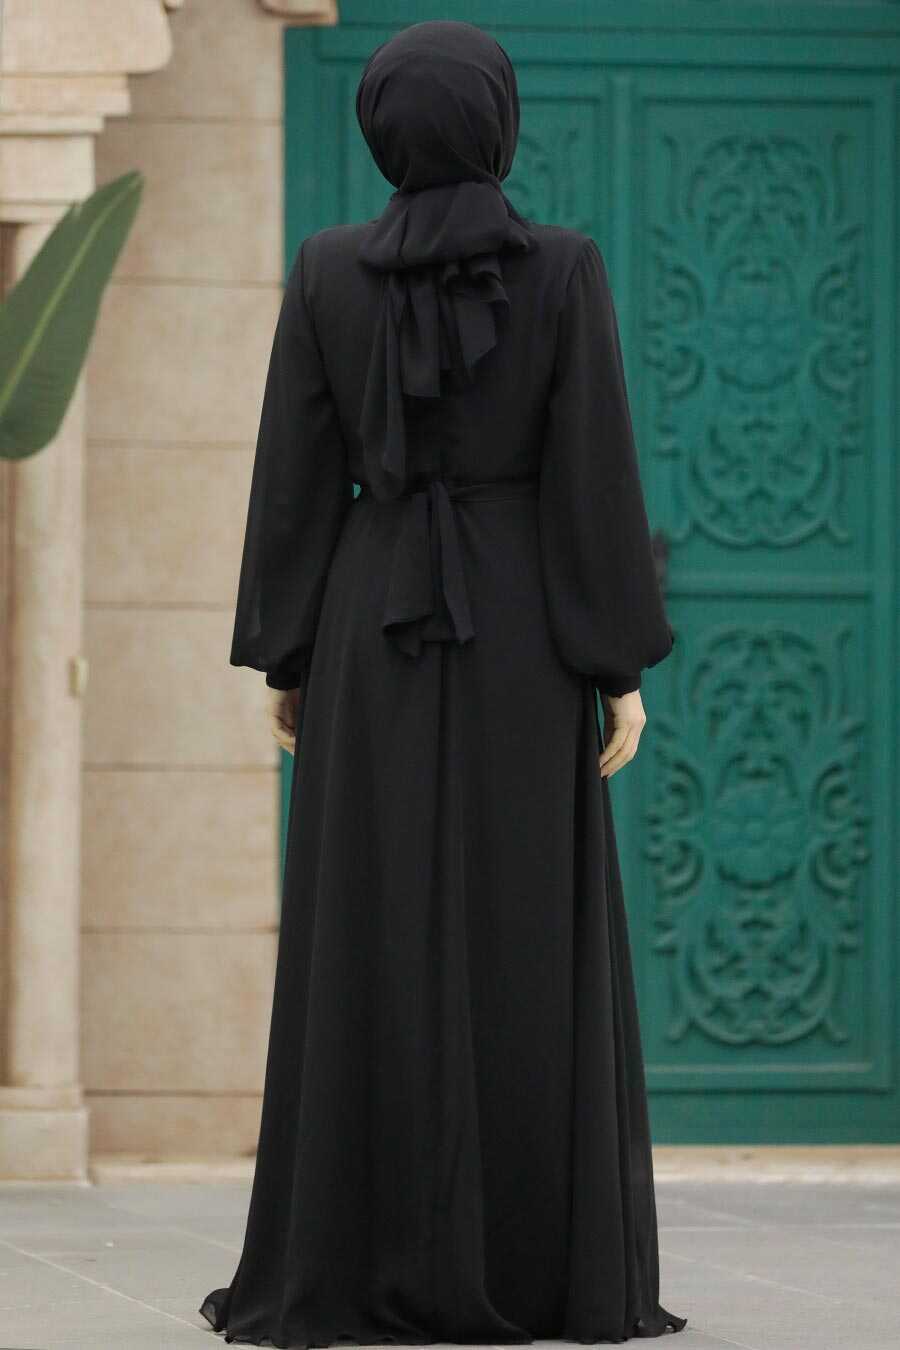 Neva Style - Modern Black Modest Prom Dress 22153S